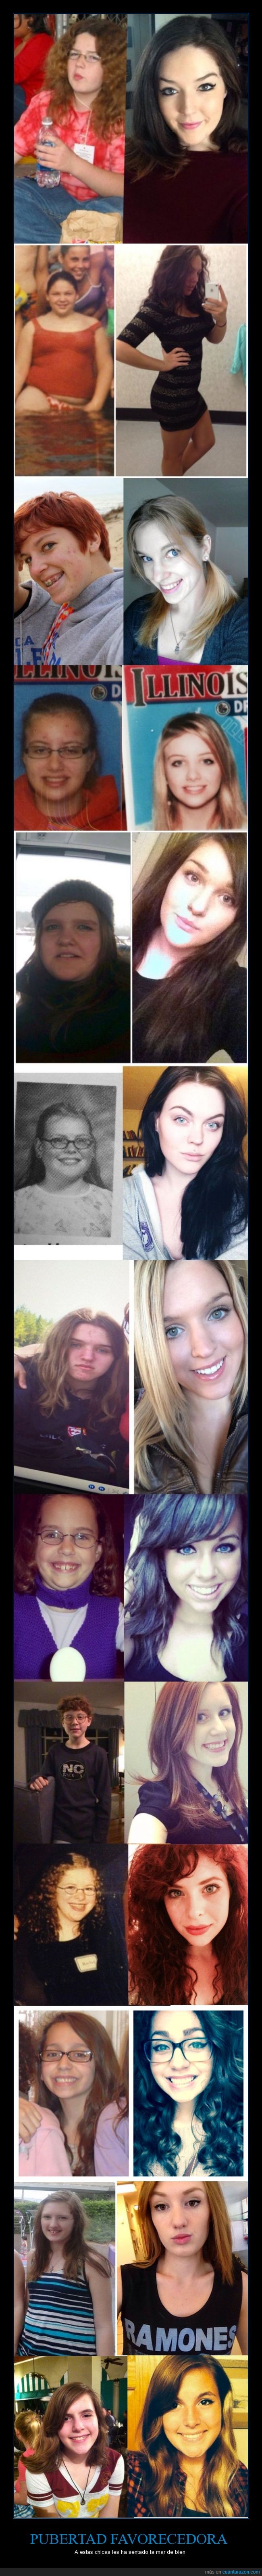 chicas,guapas,bonitas,cambio,pubertad,estiron,belleza,crecer,evolucion